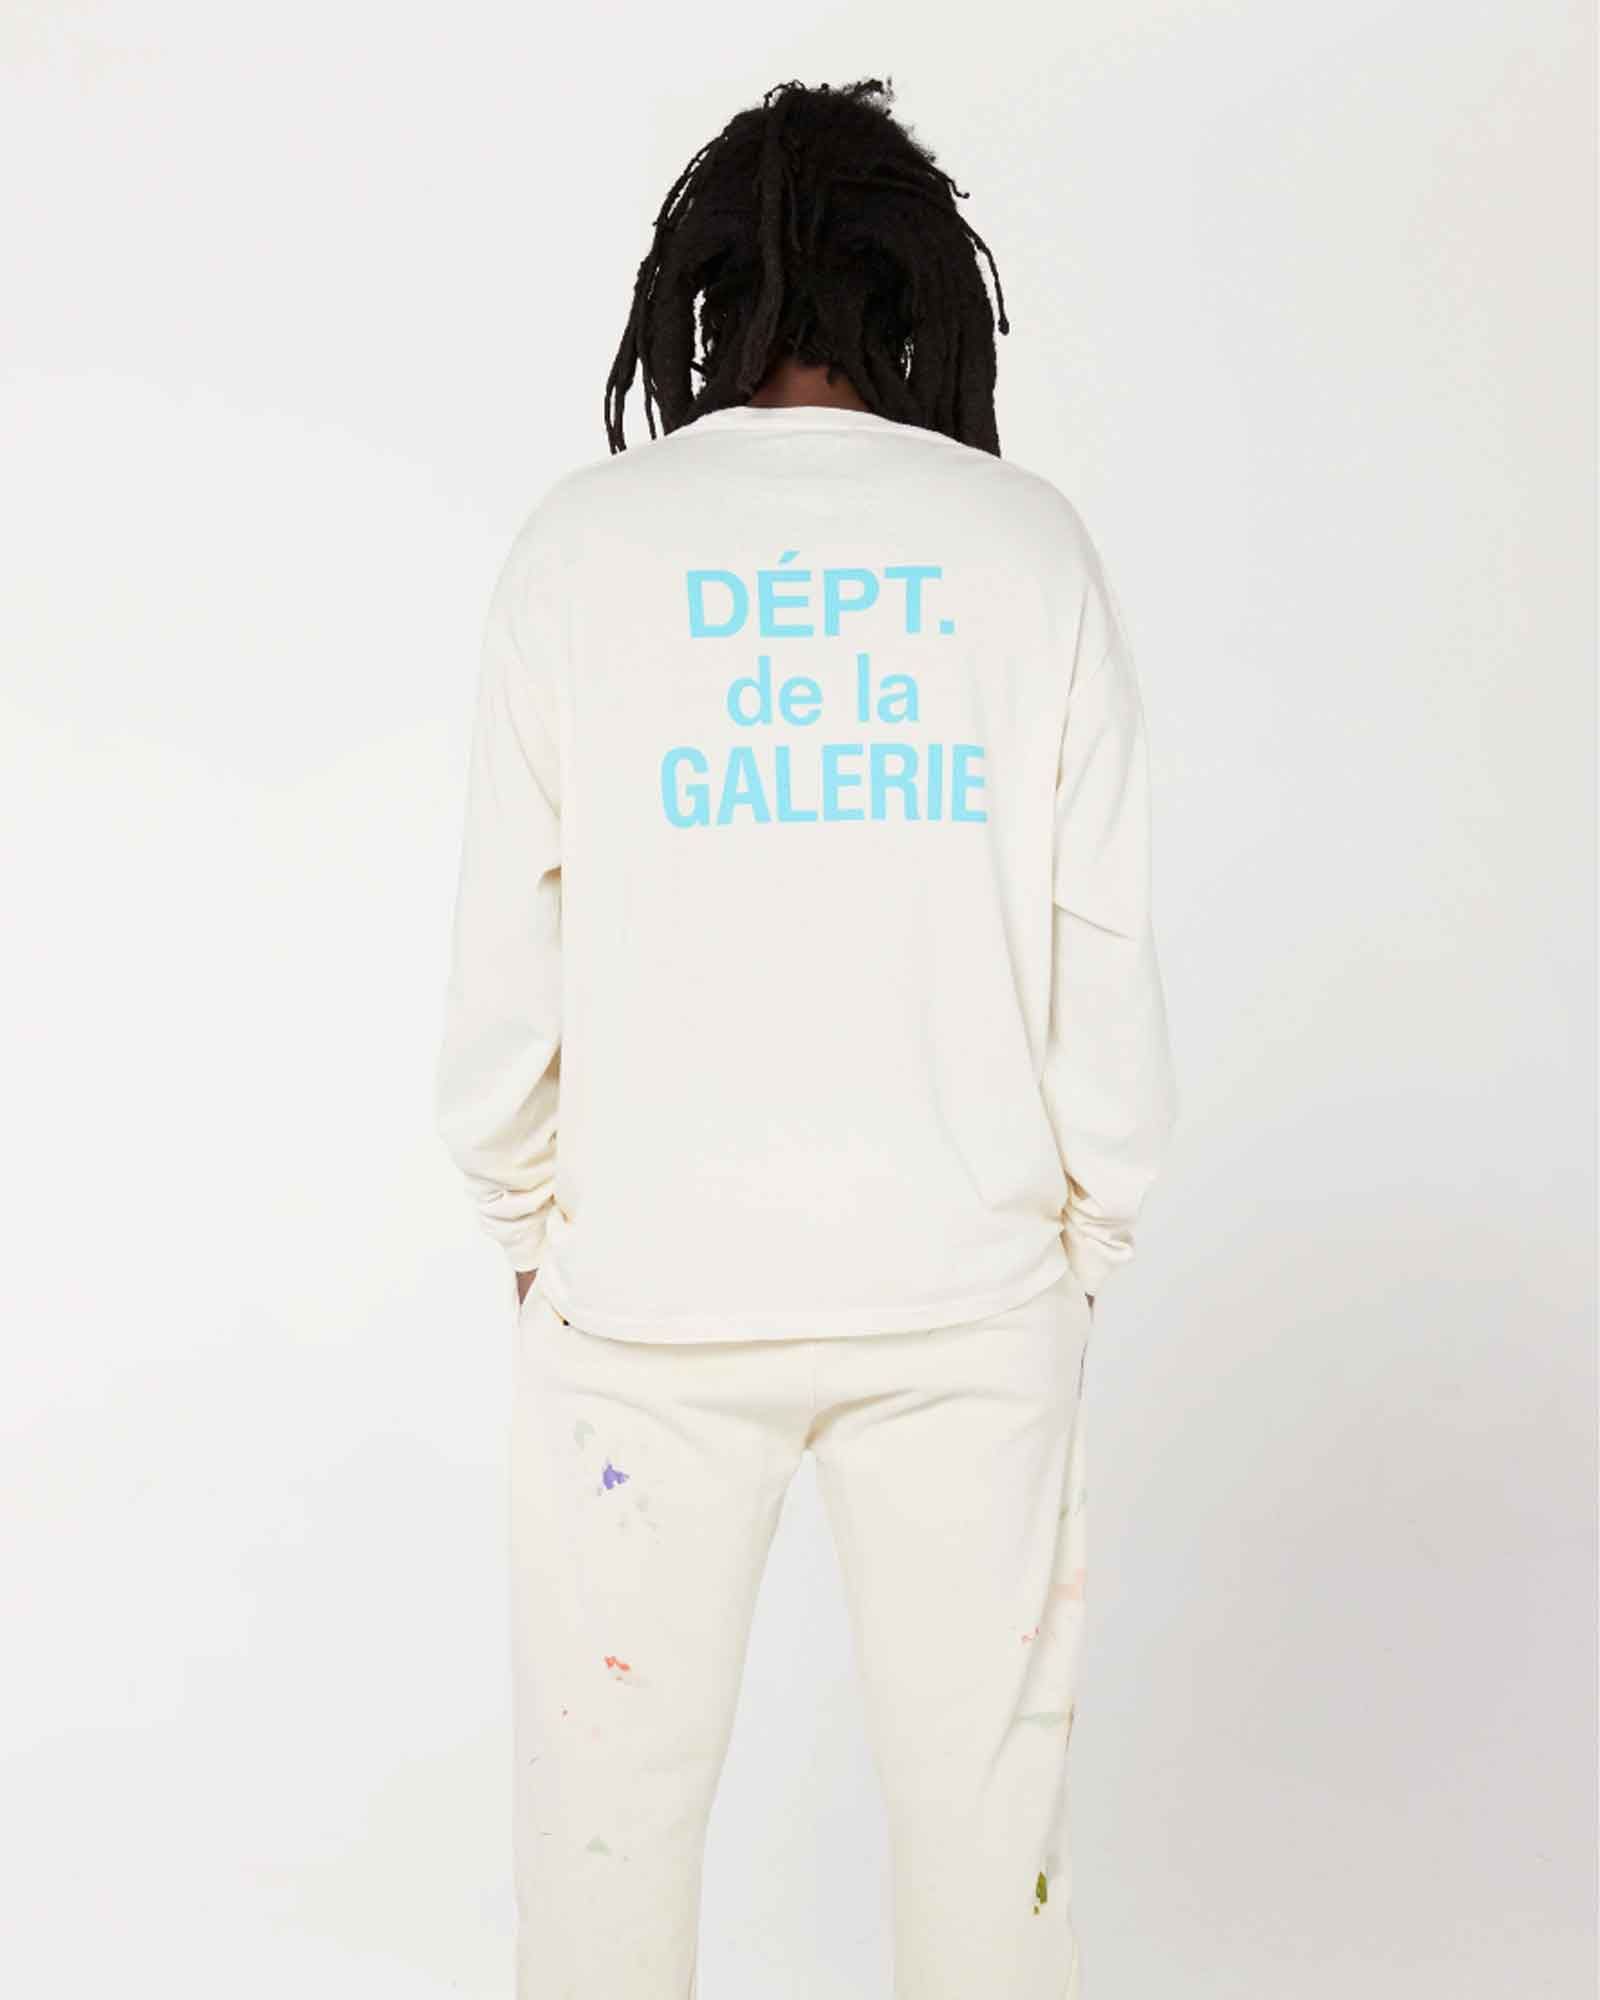 GALLERY DEPT. - DEPT DE LA GALERIE L/S PT (ロンT) Cream | Detail